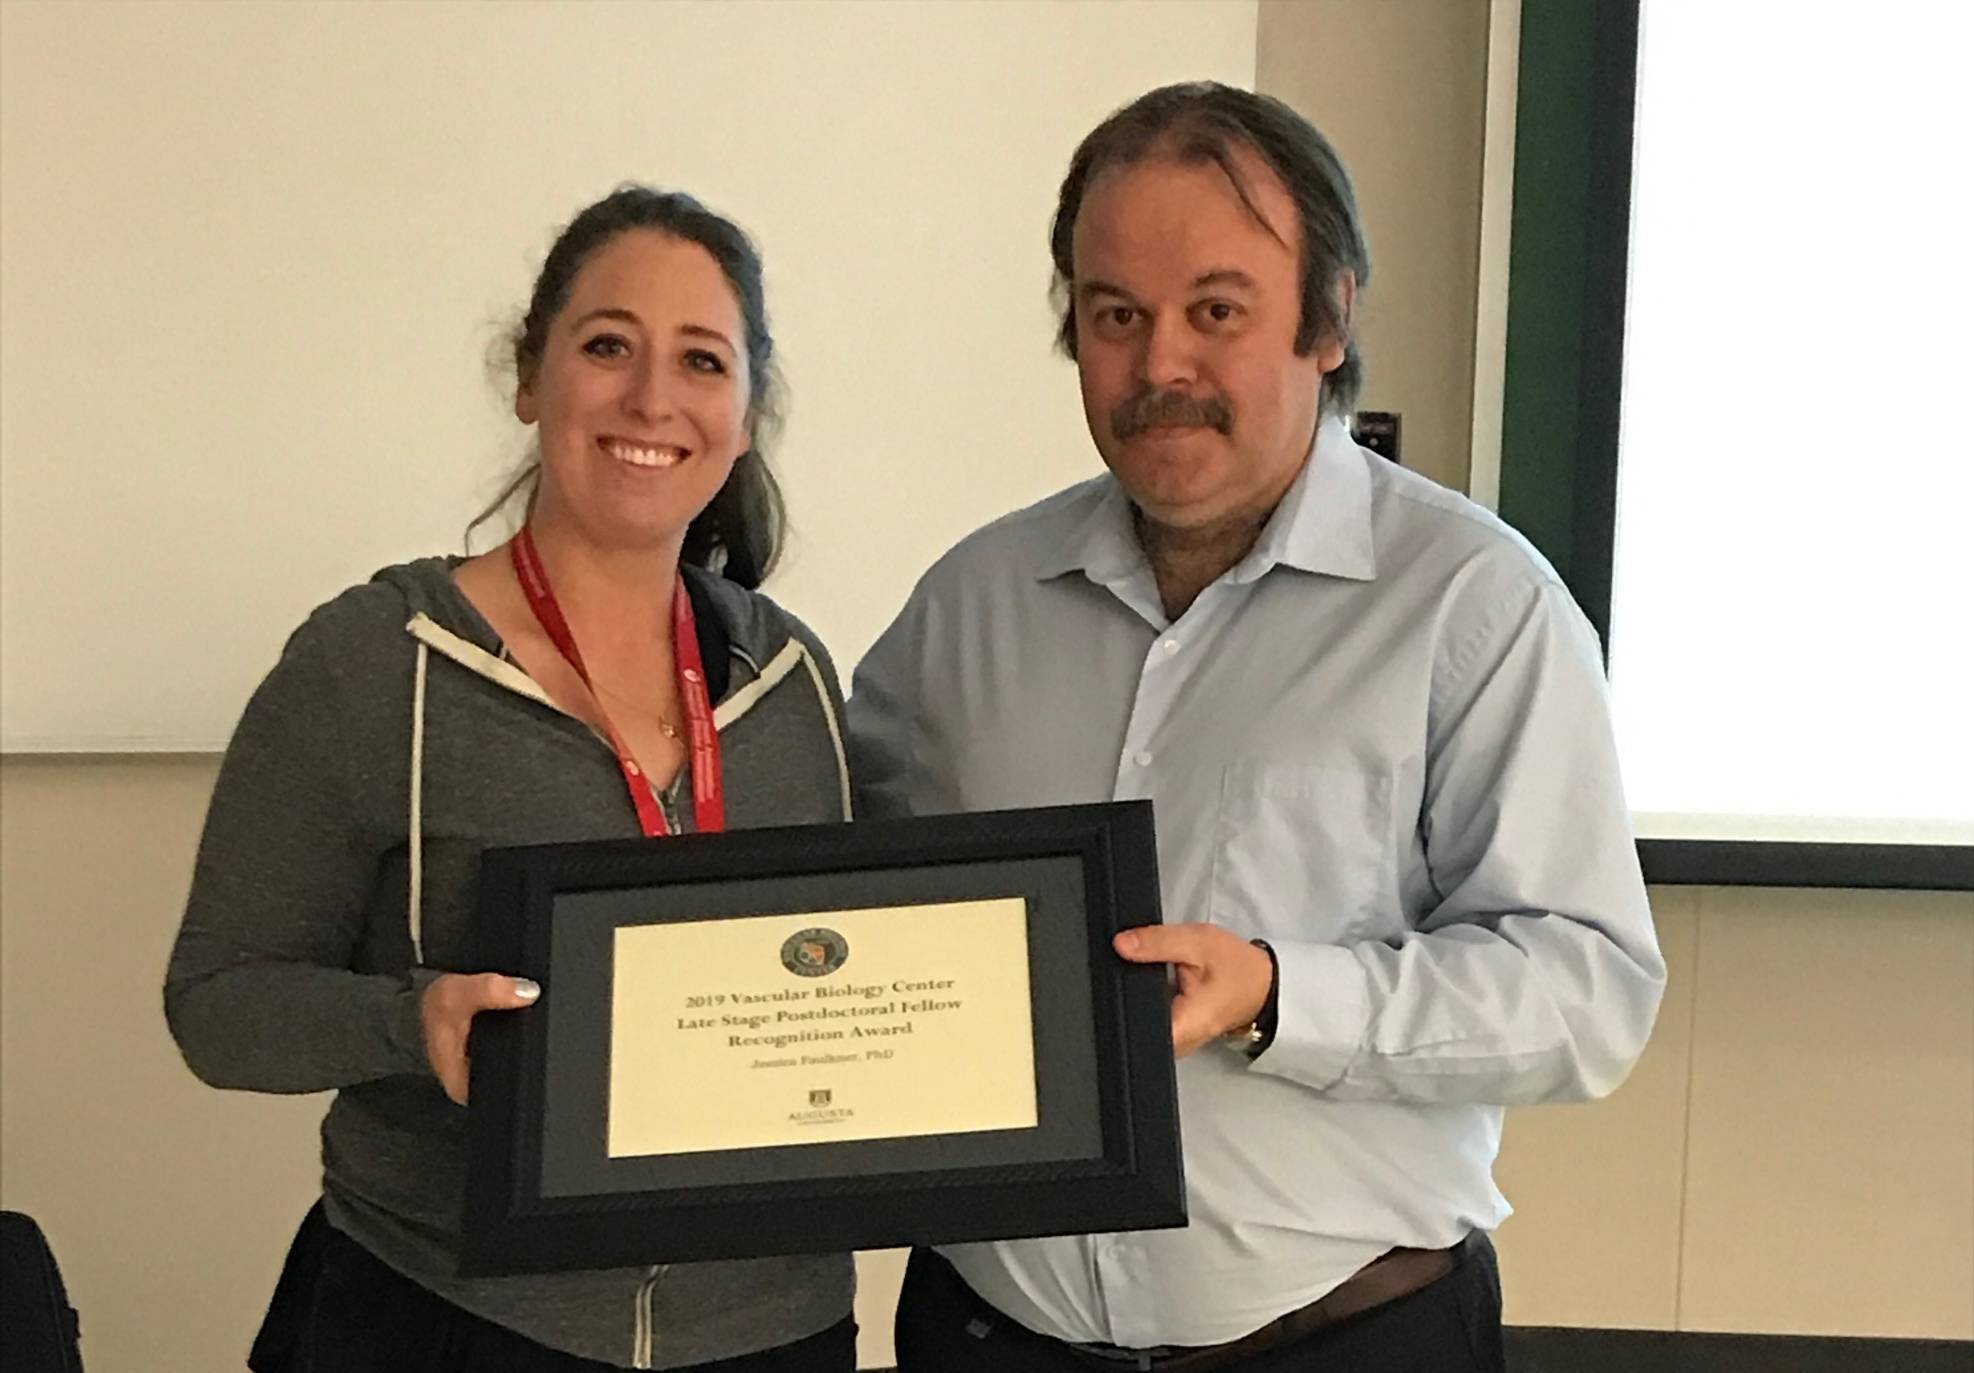 2019 Augusta University Vascular Biology Center Journal Club Excellence Award awarded to Jessica FAULKNER